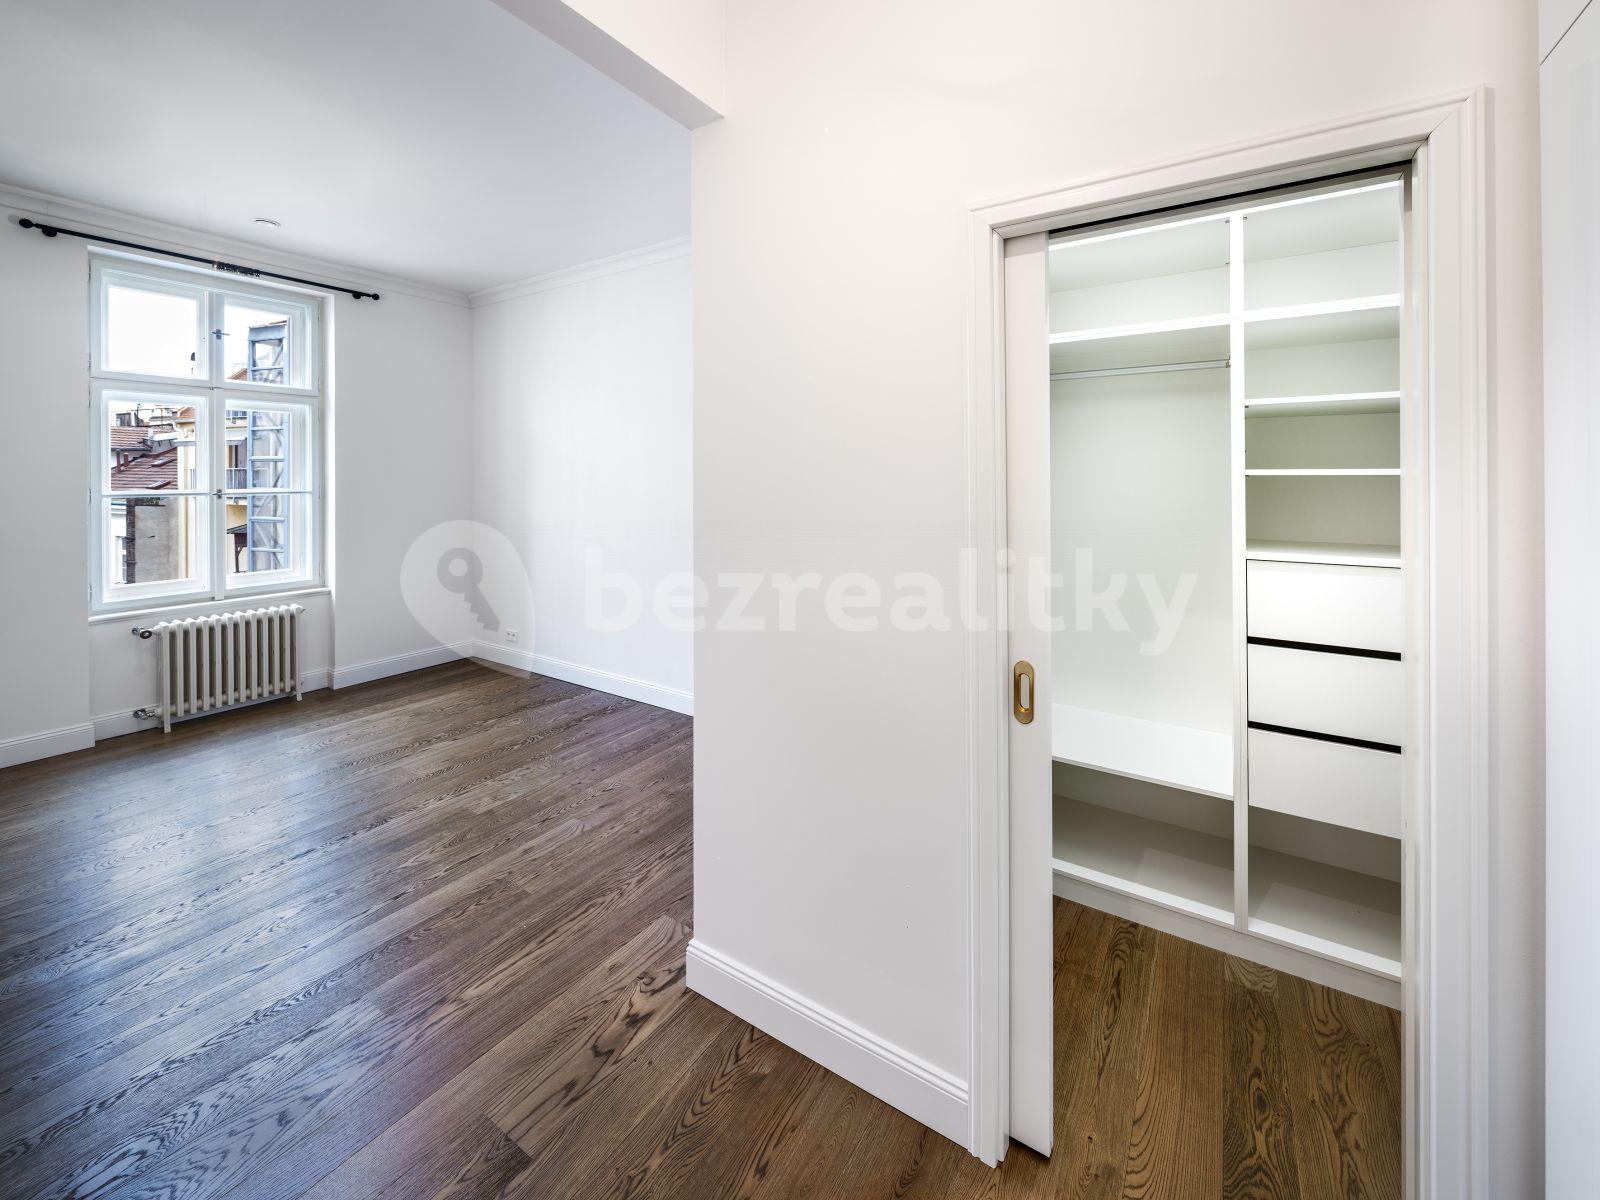 2 bedroom with open-plan kitchen flat to rent, 113 m², Prague, Prague